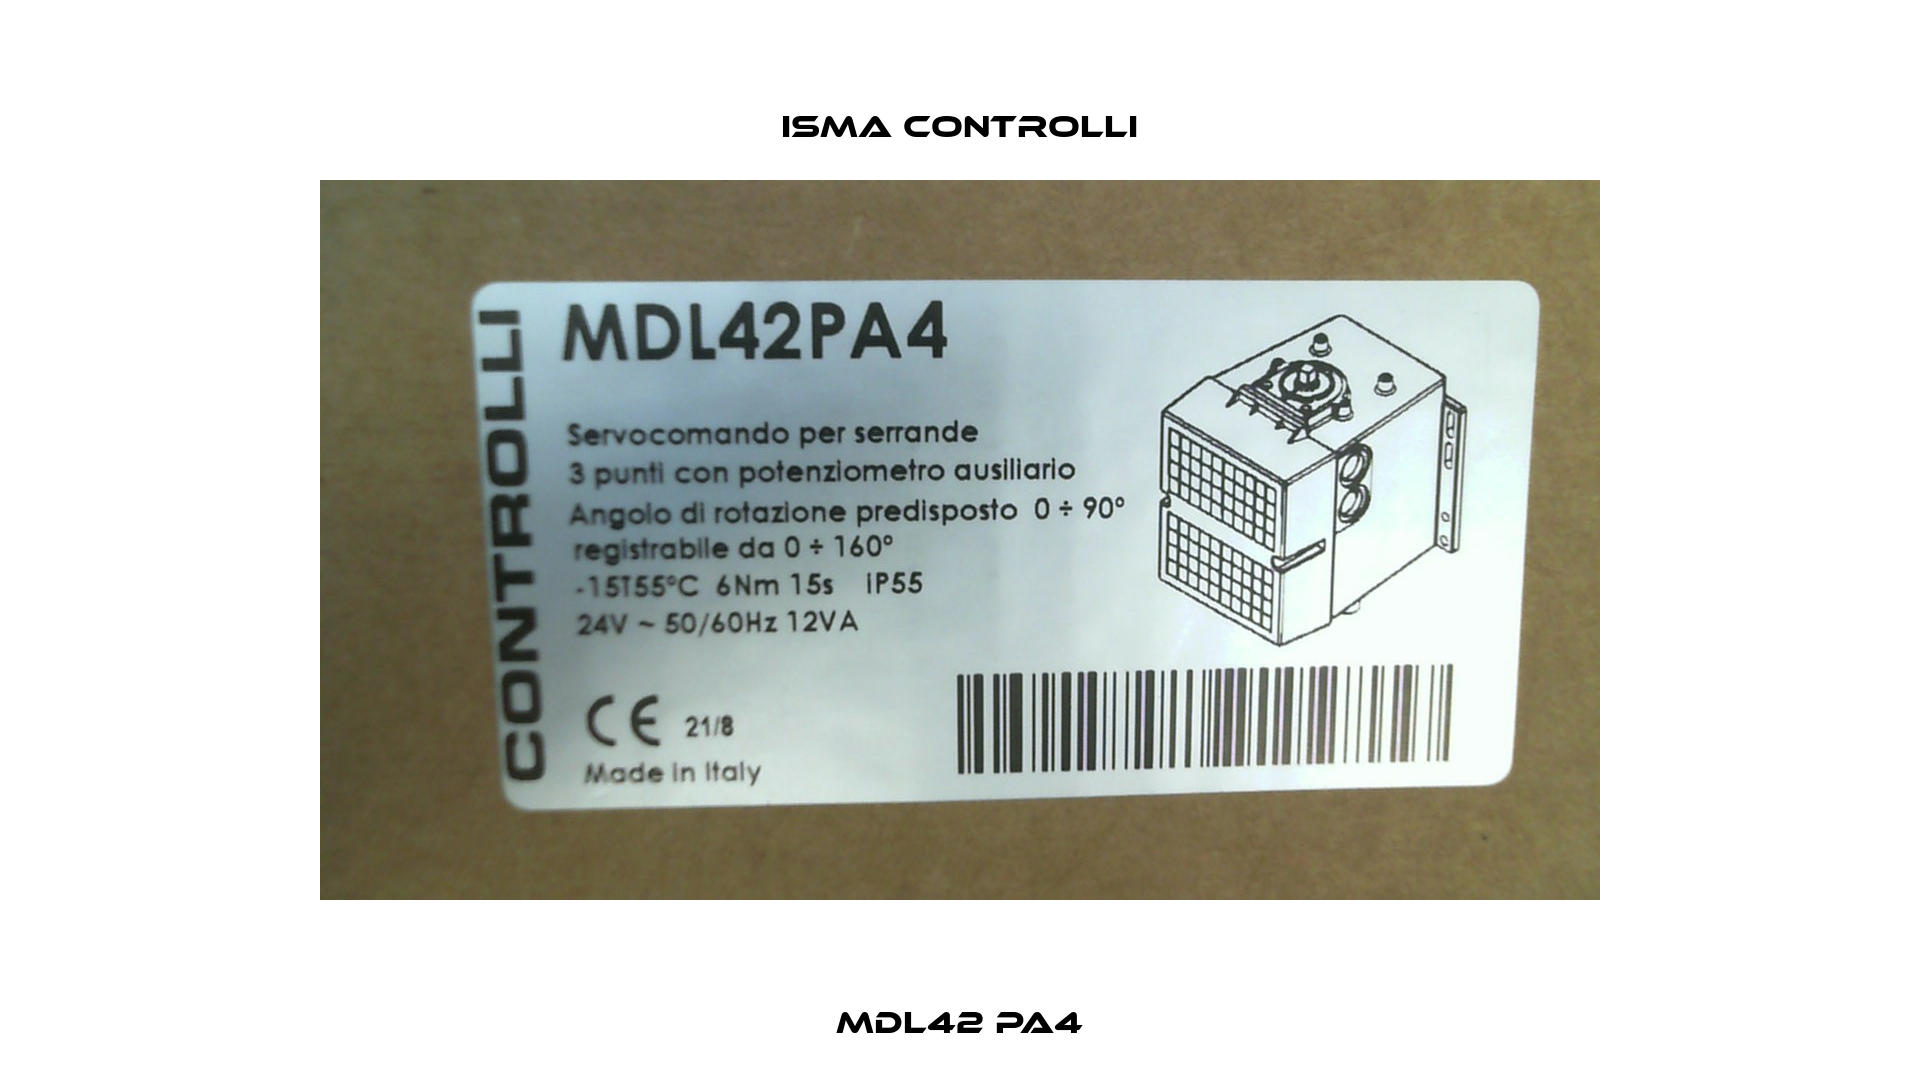 MDL42 PA4 iSMA CONTROLLI